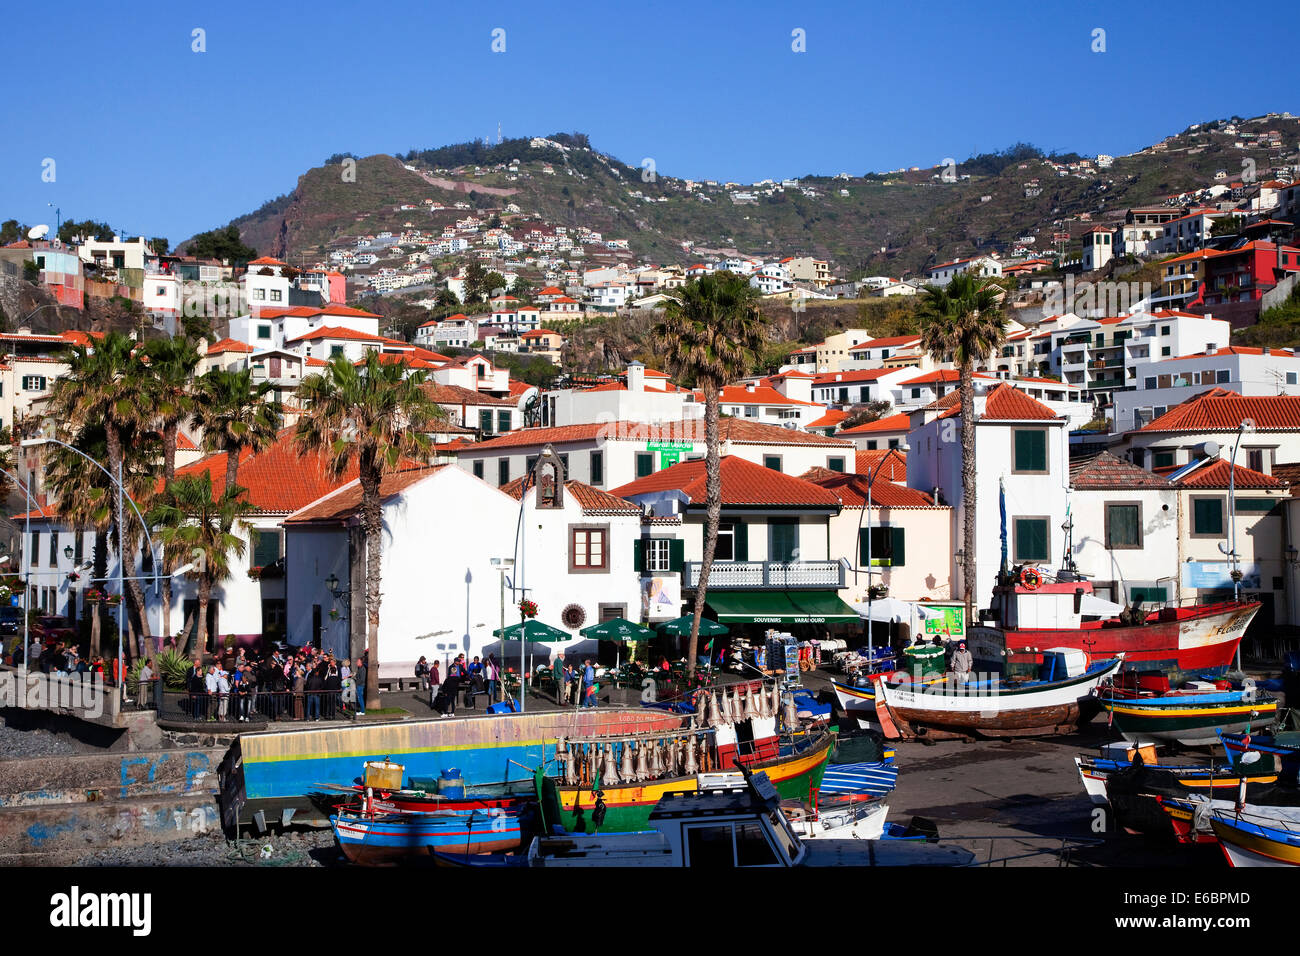 Bustling tourist life in the fishing village of Camara dos Lobos, Madeira, Portugal Stock Photo